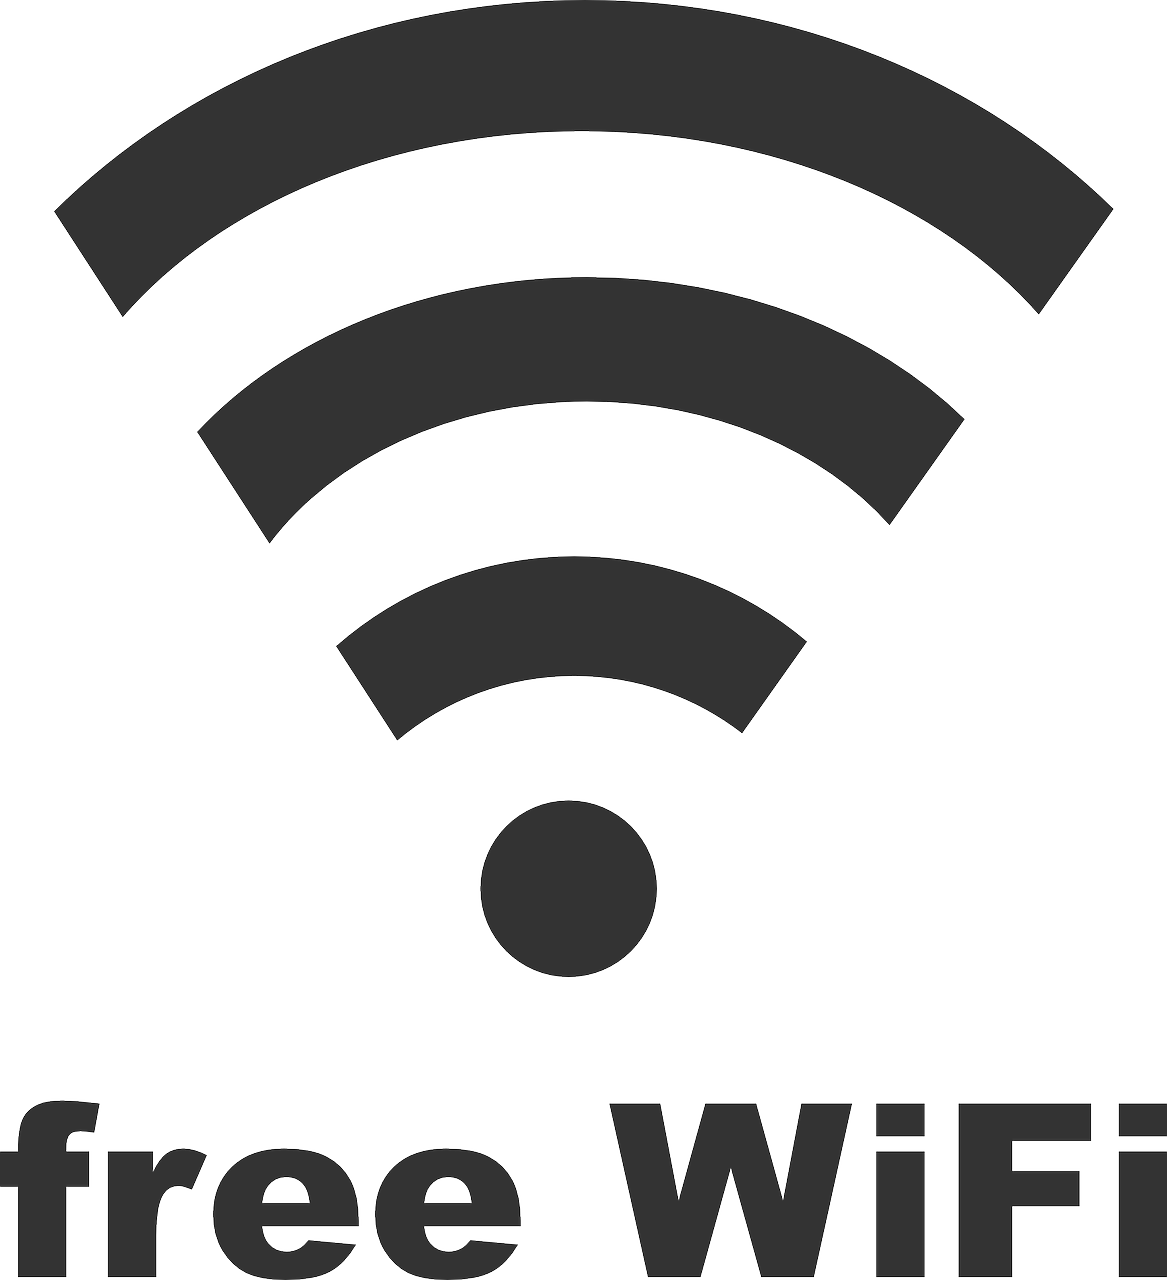 Trasparente Wifi a banda larga